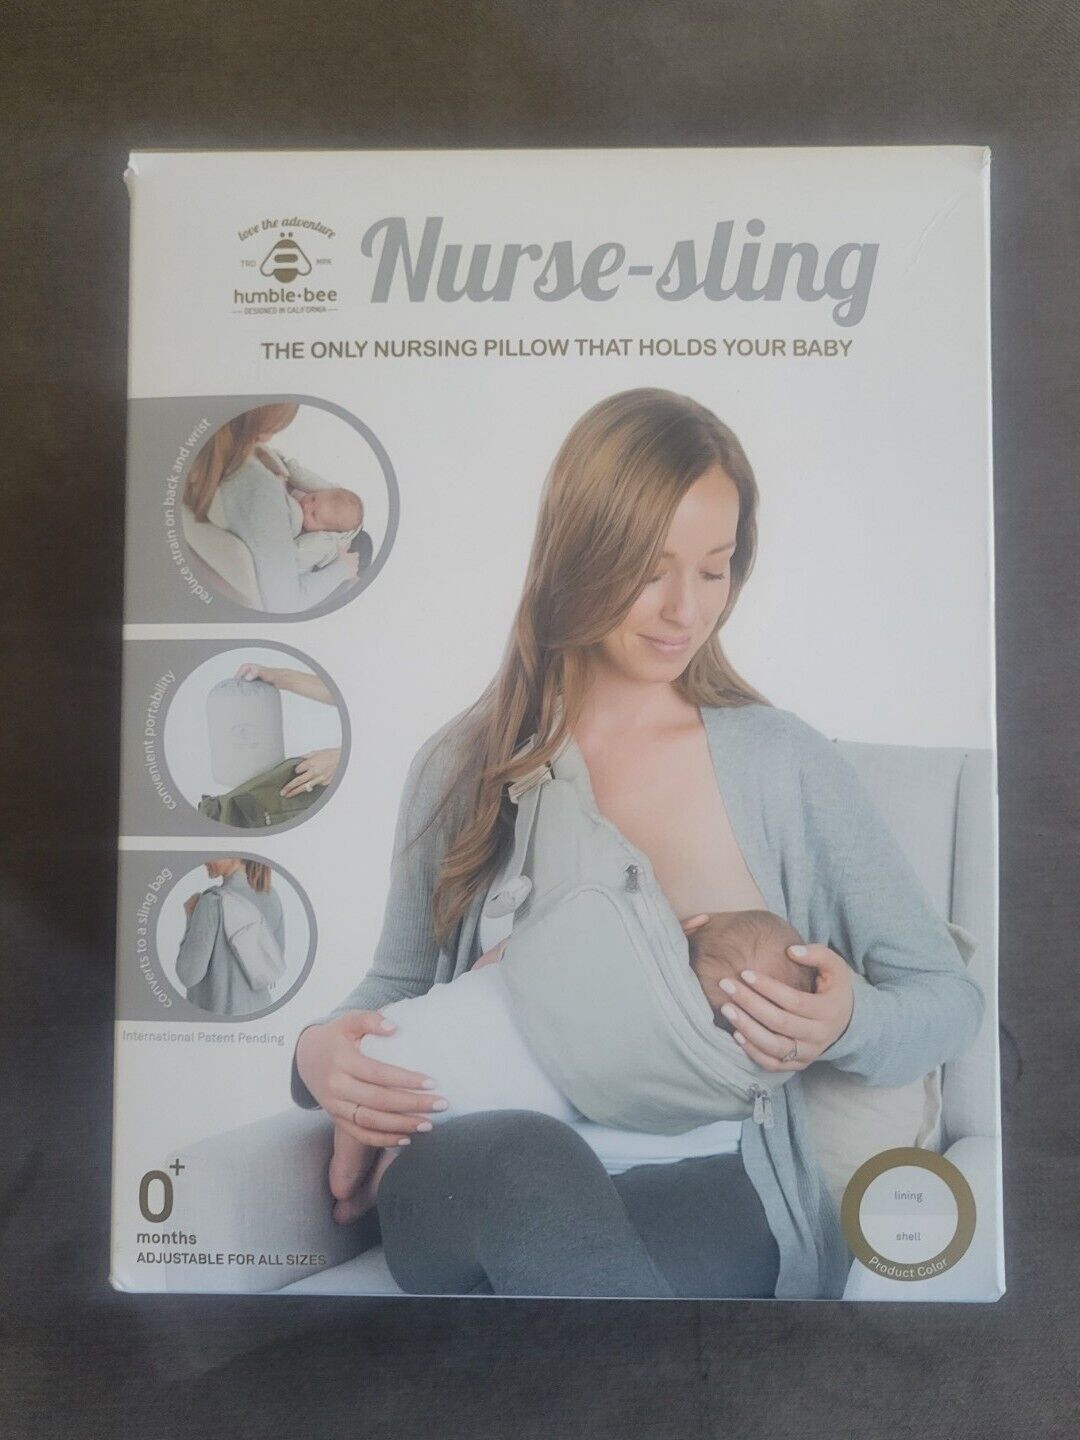 Nurse-sling - Nursing Pillow/sling Bag (gray) By Humble-bee